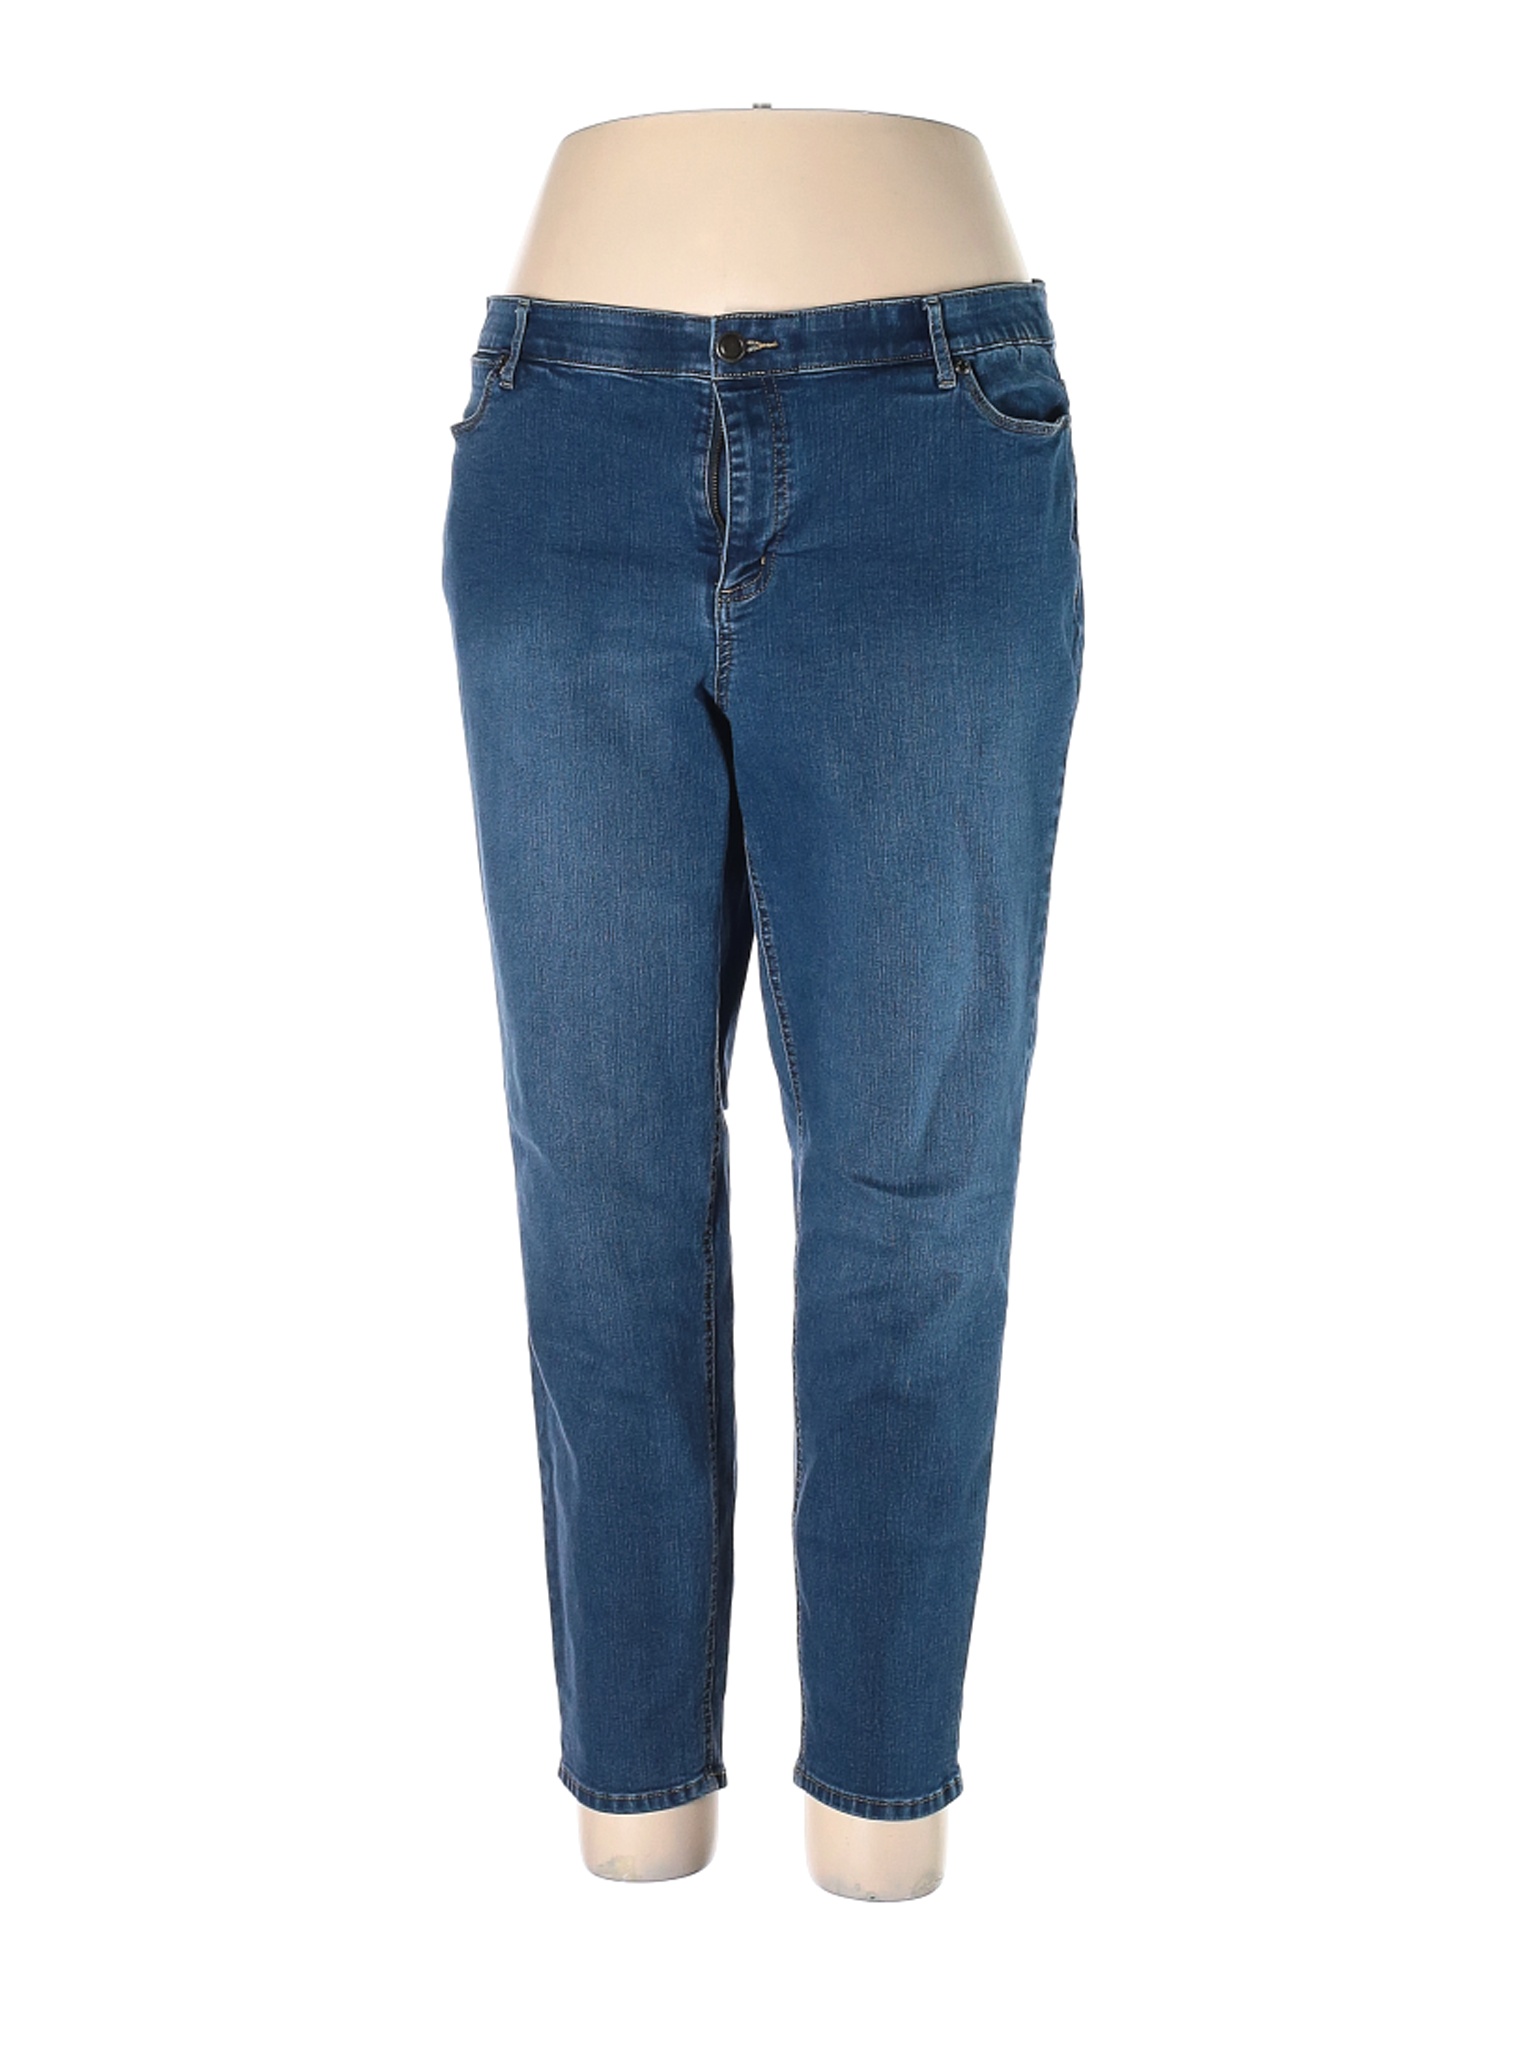 Cj Banks Women Blue Jeans 18 Plus | eBay